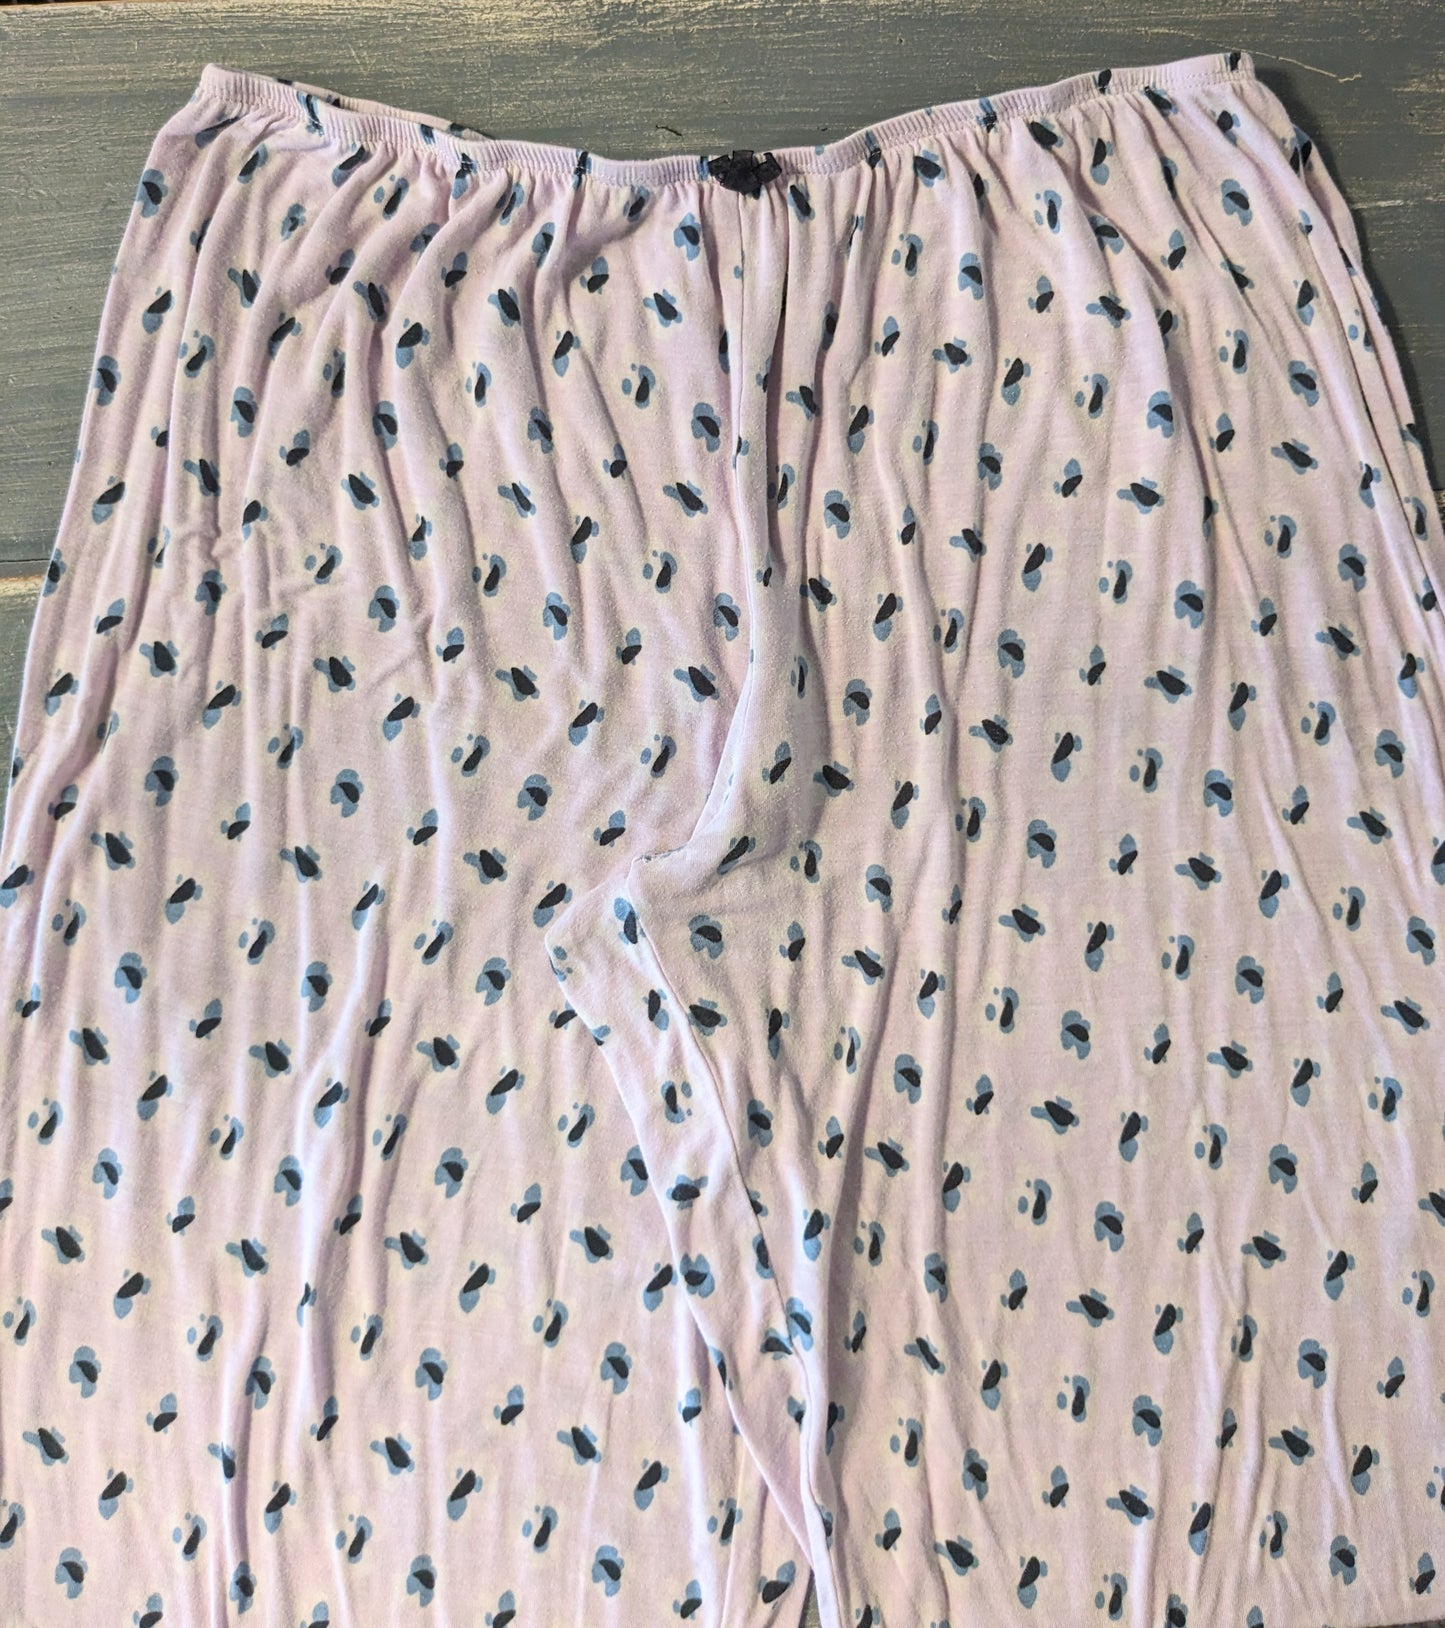 Lace trimmed tank + cropped pants sleepwear 2pc set, Pink